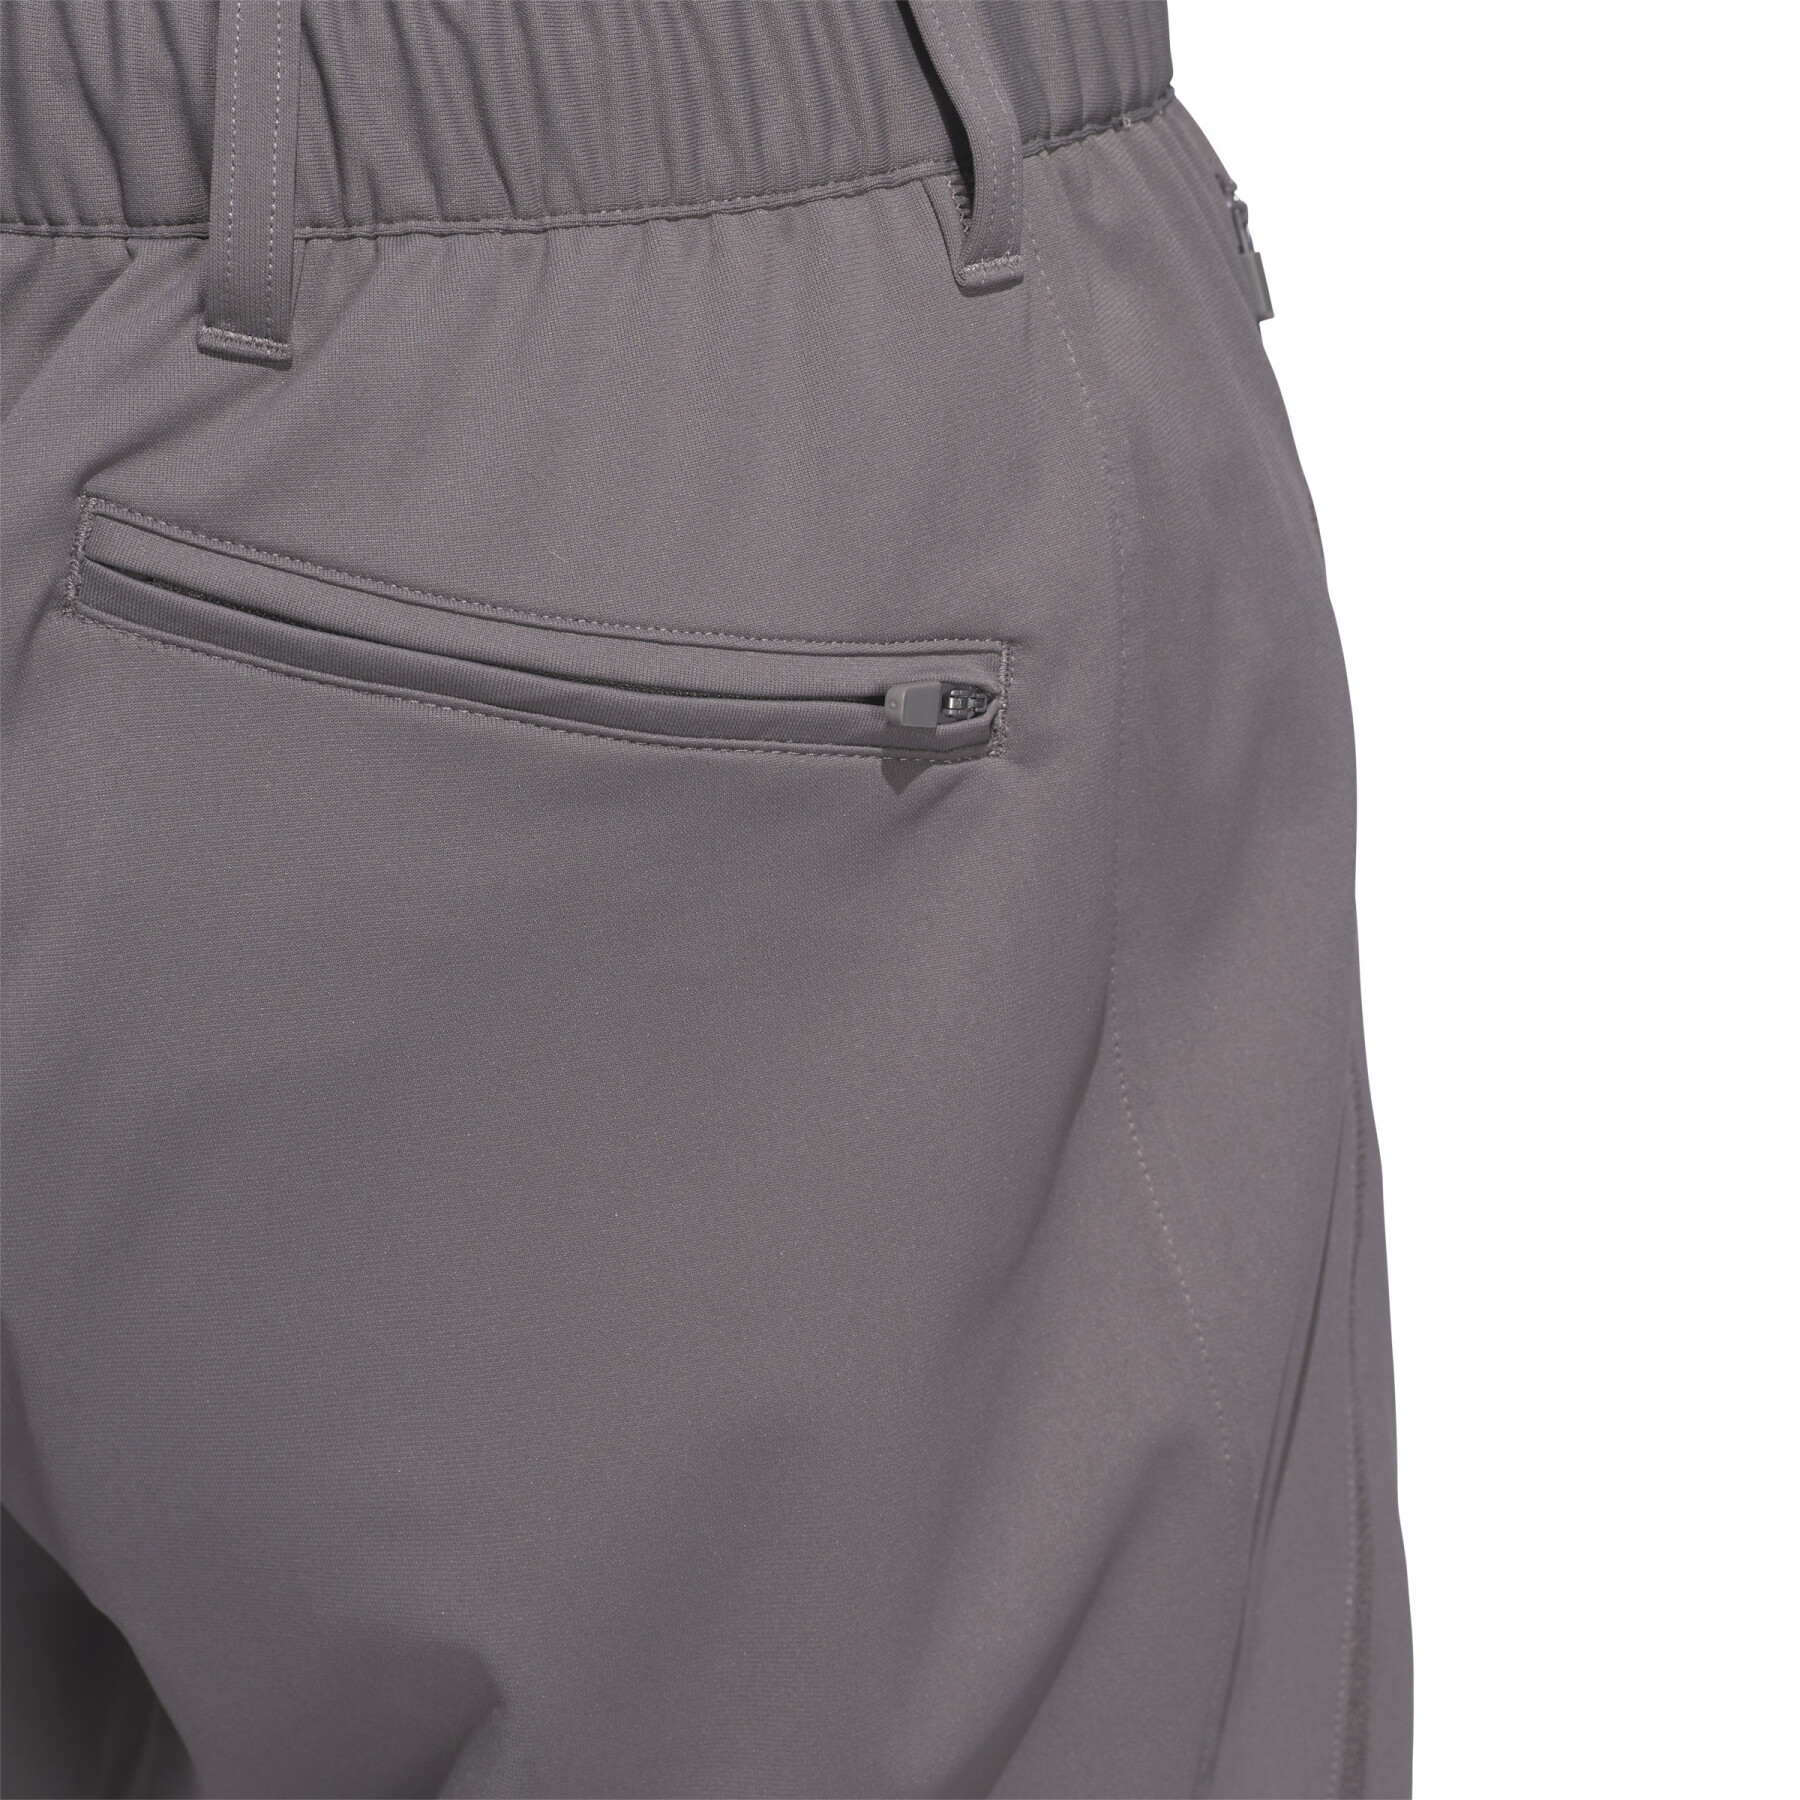 Pantaloni adidas Ultimate365